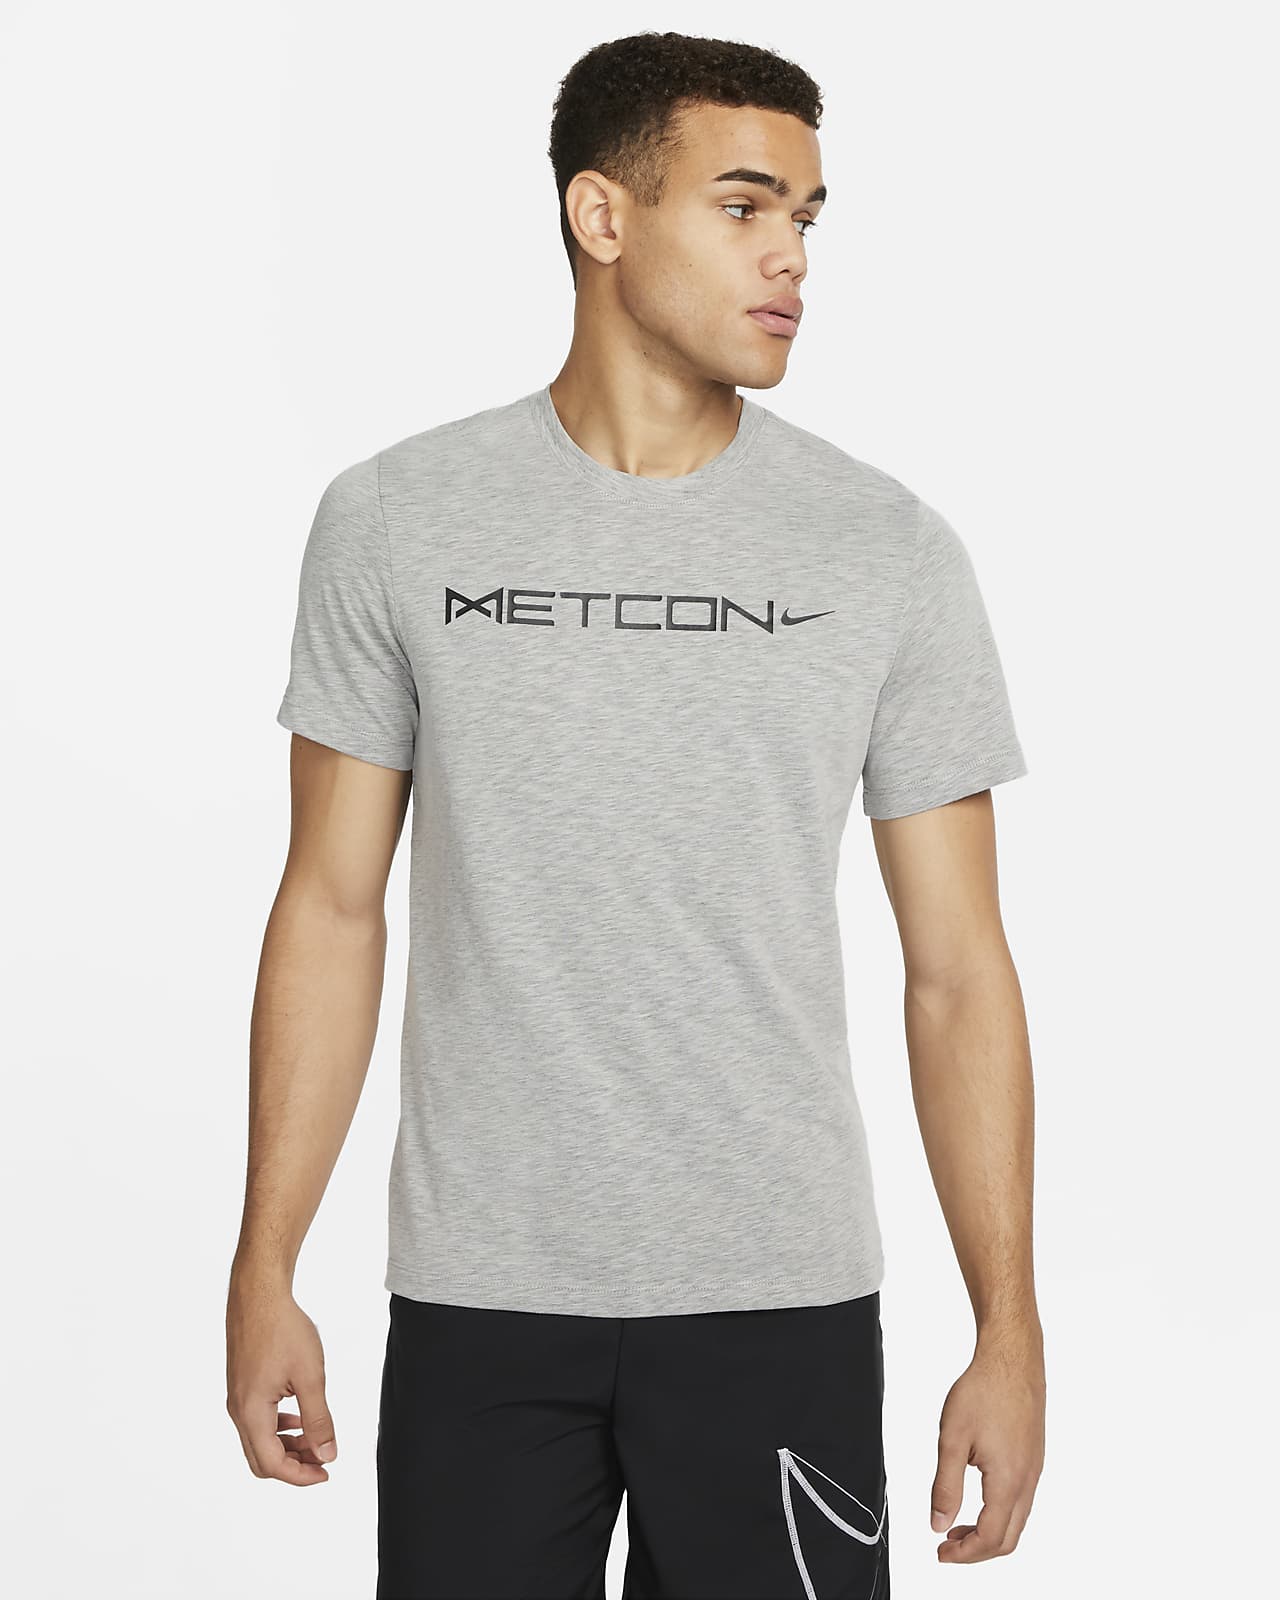 Nike Dri-FIT "Metcon" Men's Training T-Shirt